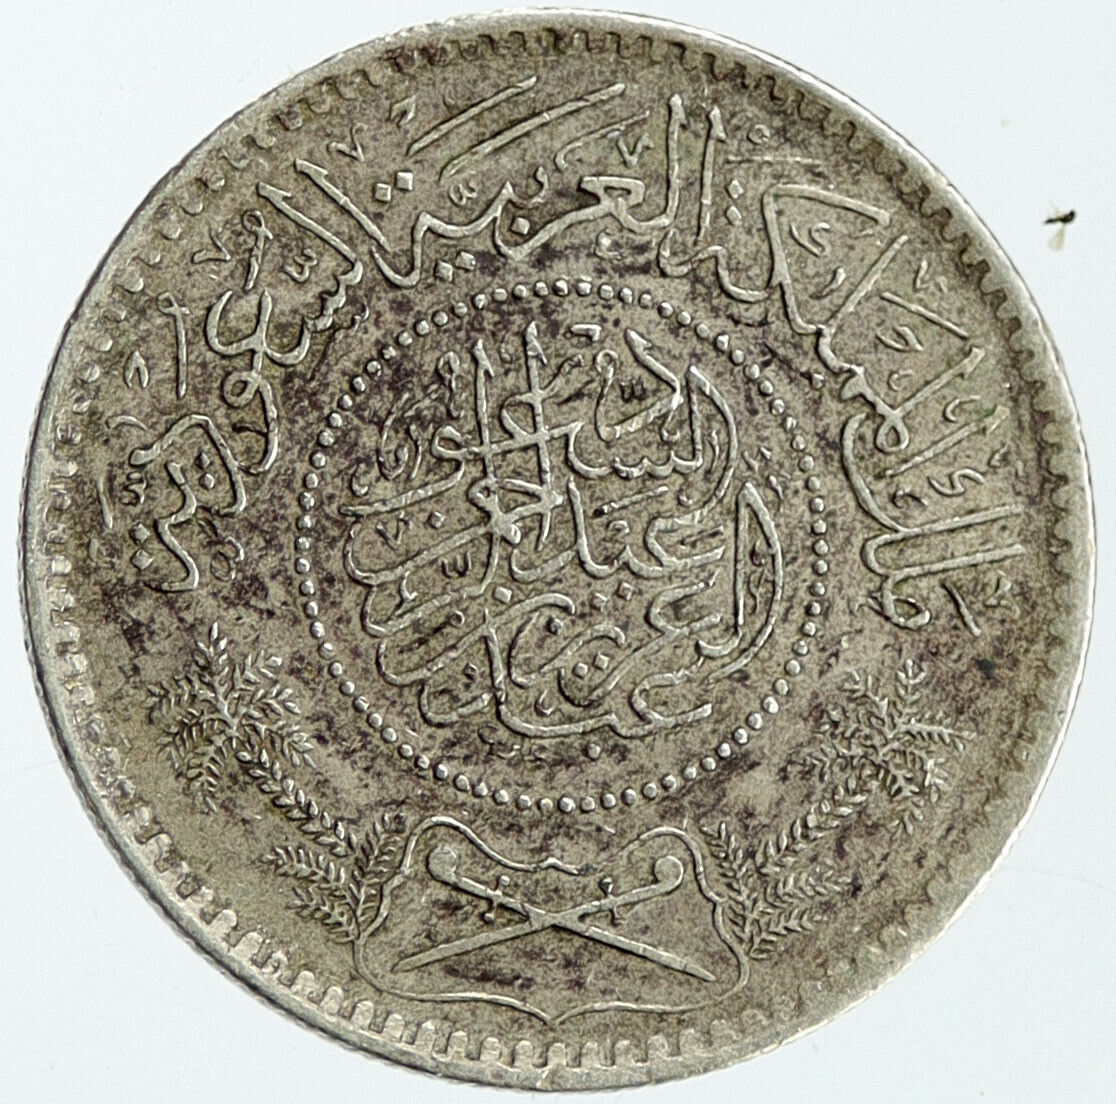 1936 1354AH SAUDI ARABIA King Large 0.34oz Silver 1 Riyal Arabic Coin i117682